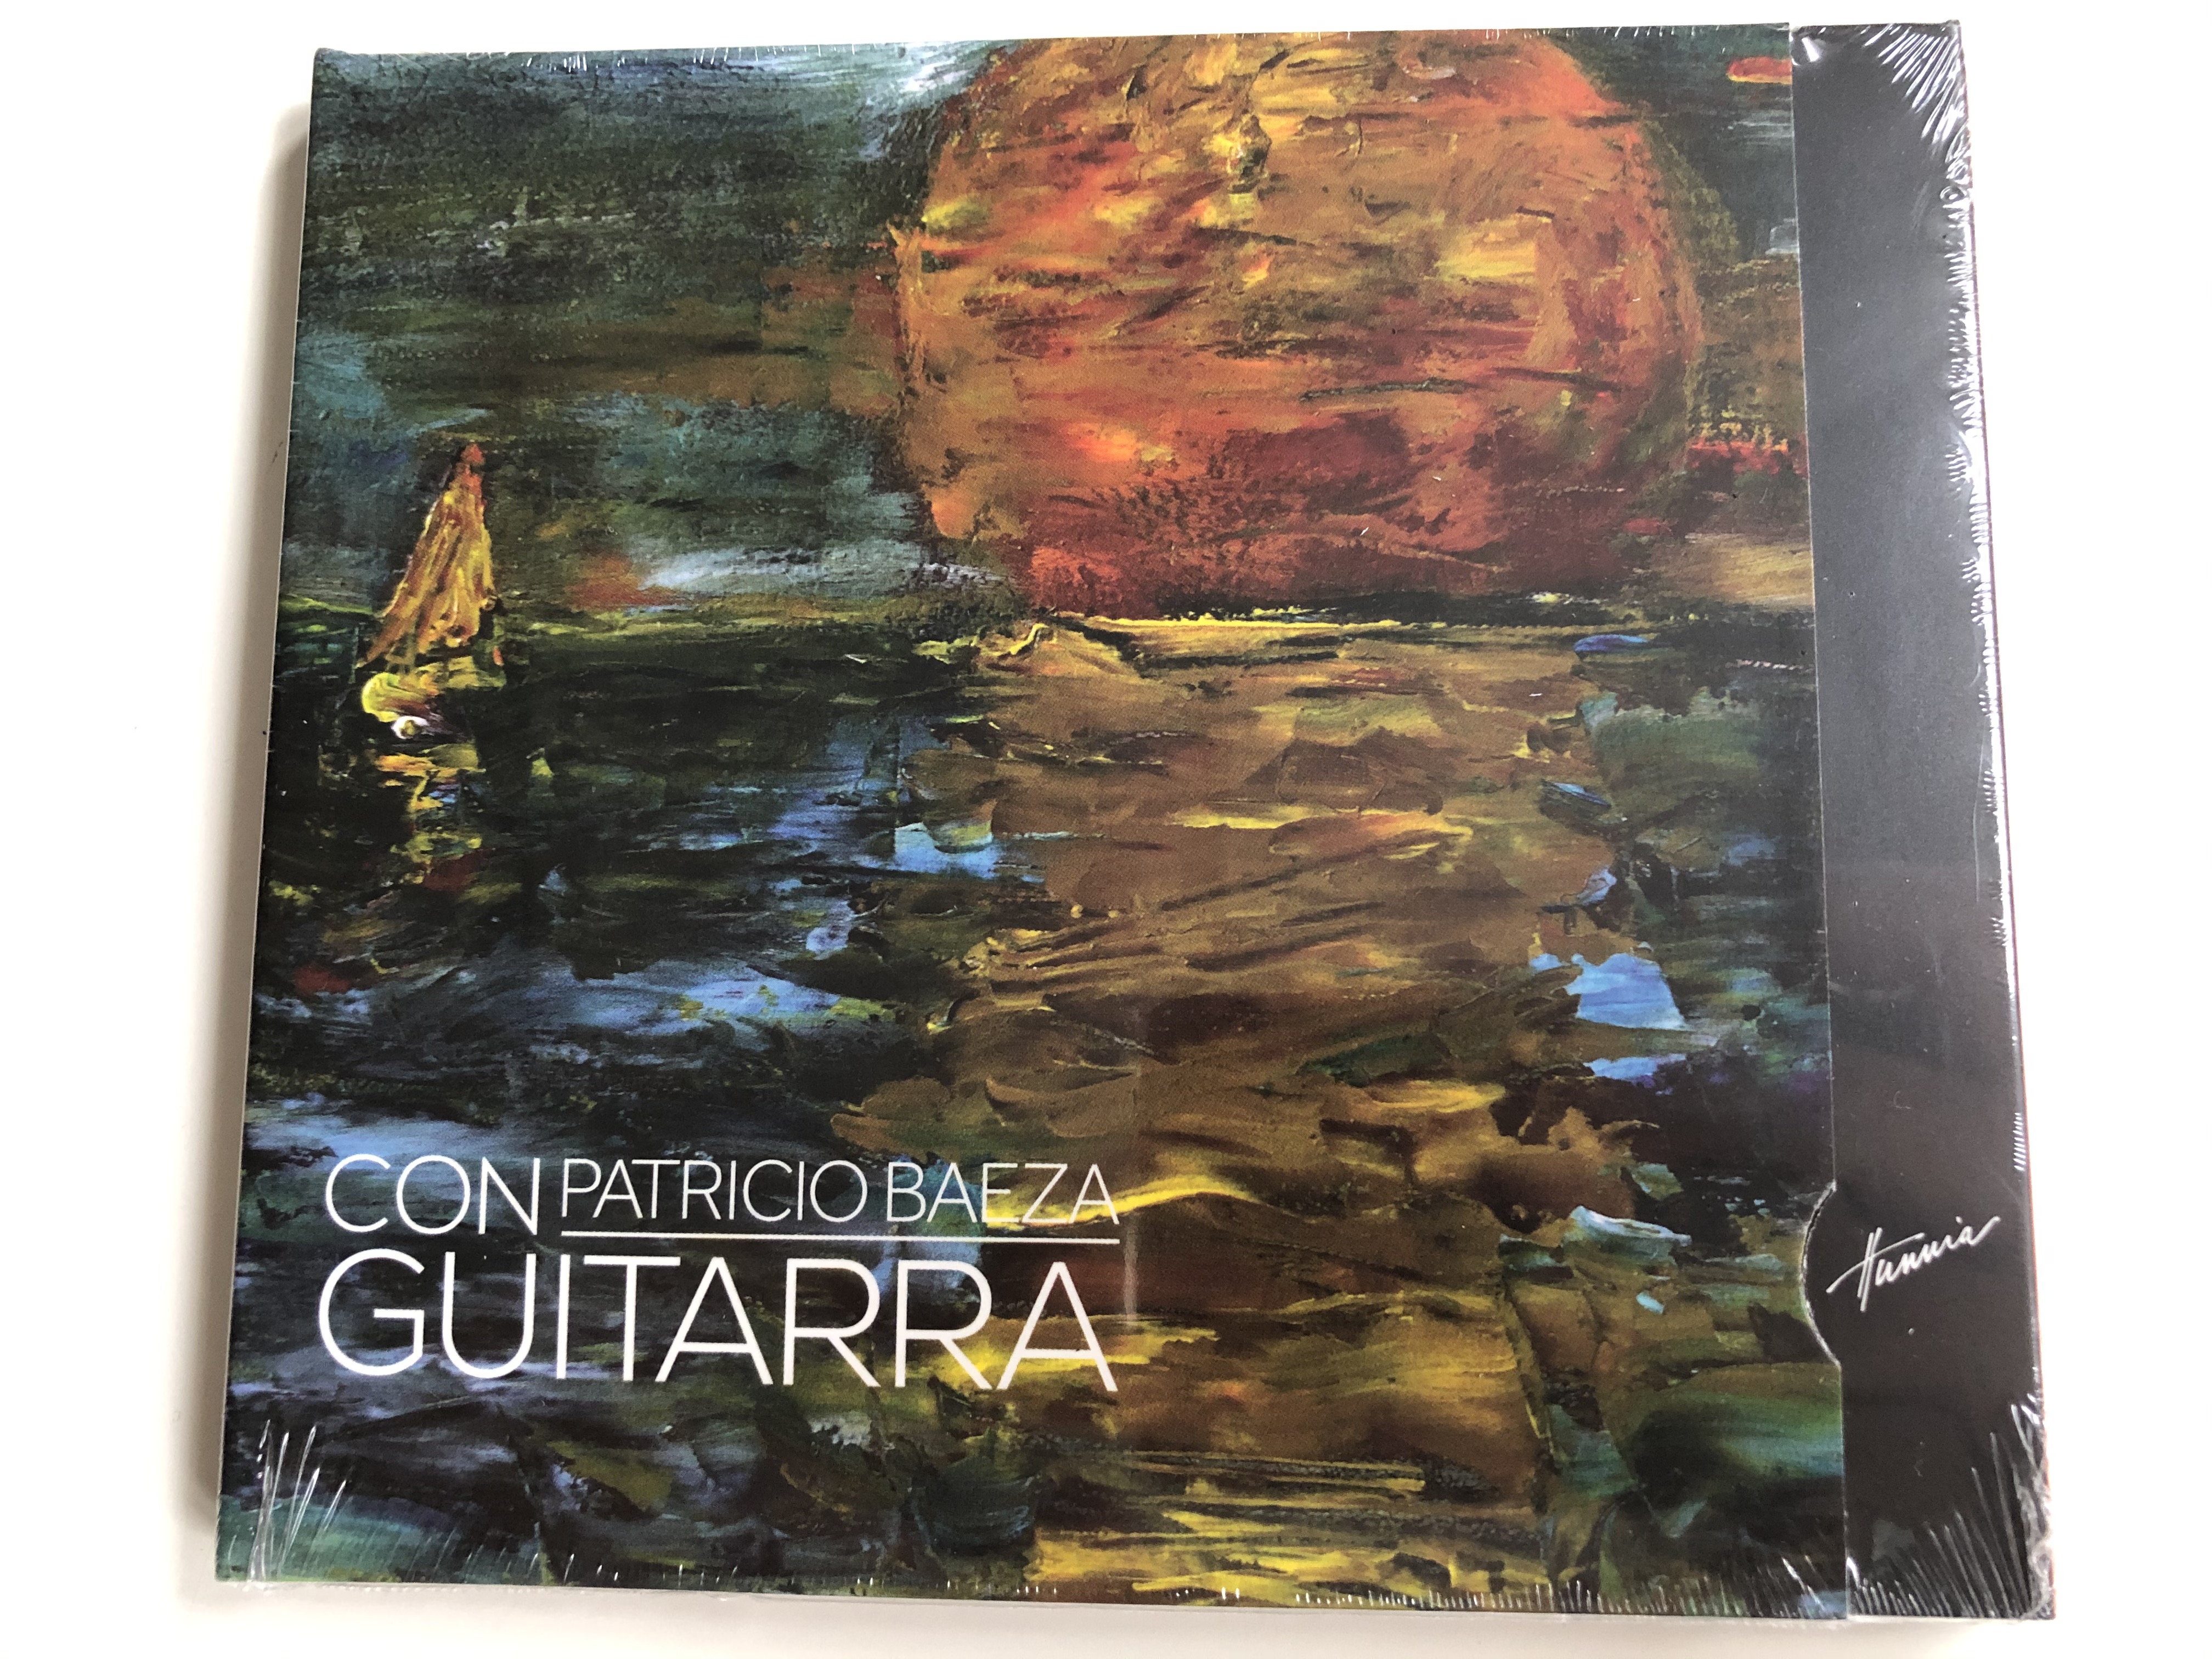 con-guitarra-patricio-baeza-hunnia-records-film-production-audio-cd-2014-hrcd-1406-1-.jpg